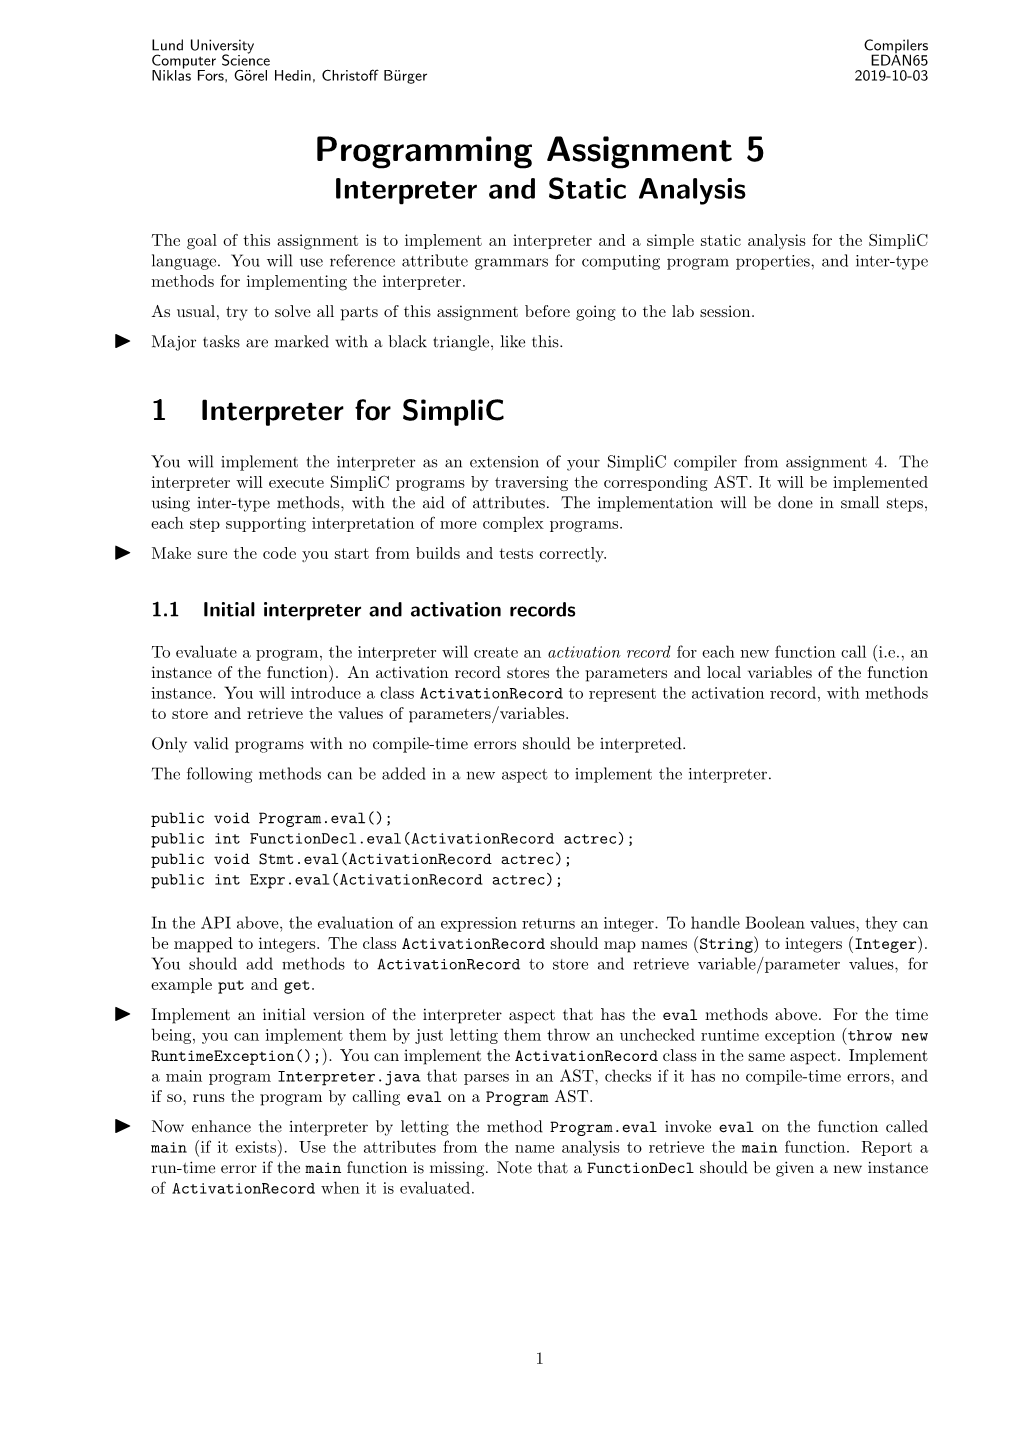 Programming Assignment 5 Interpreter and Static Analysis